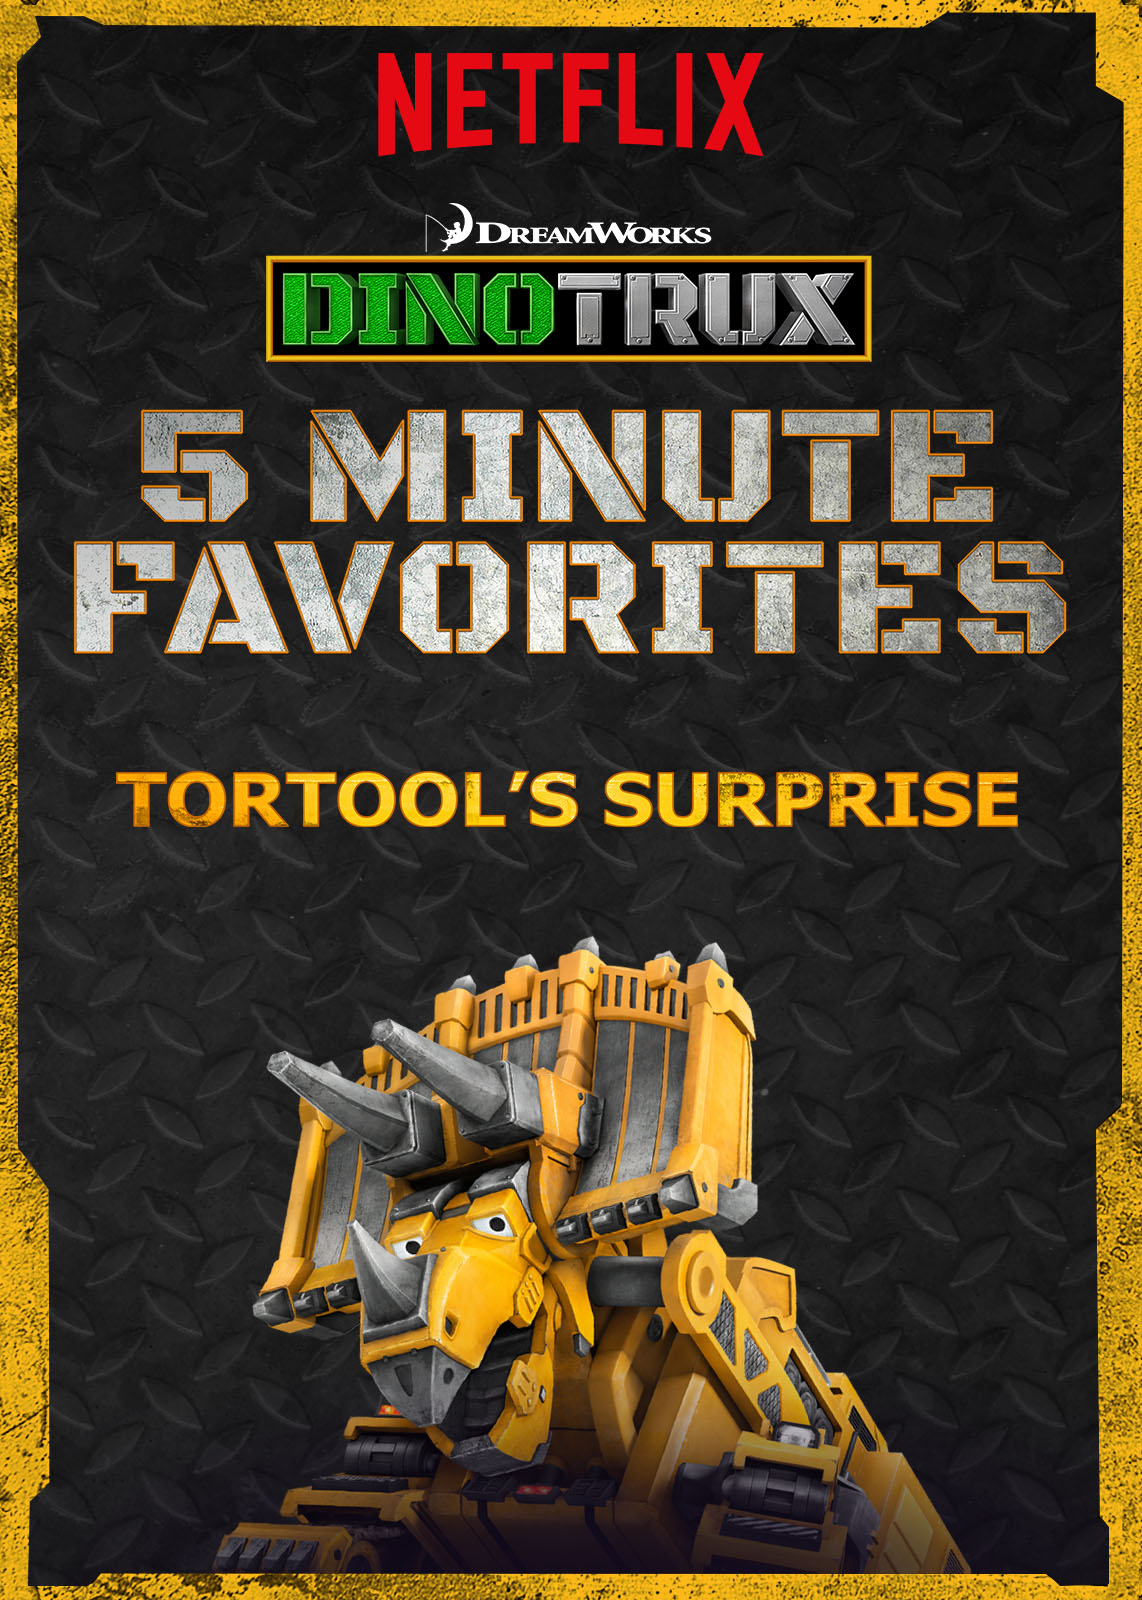 DinoTrux Tortool's Surprise (Vertical)